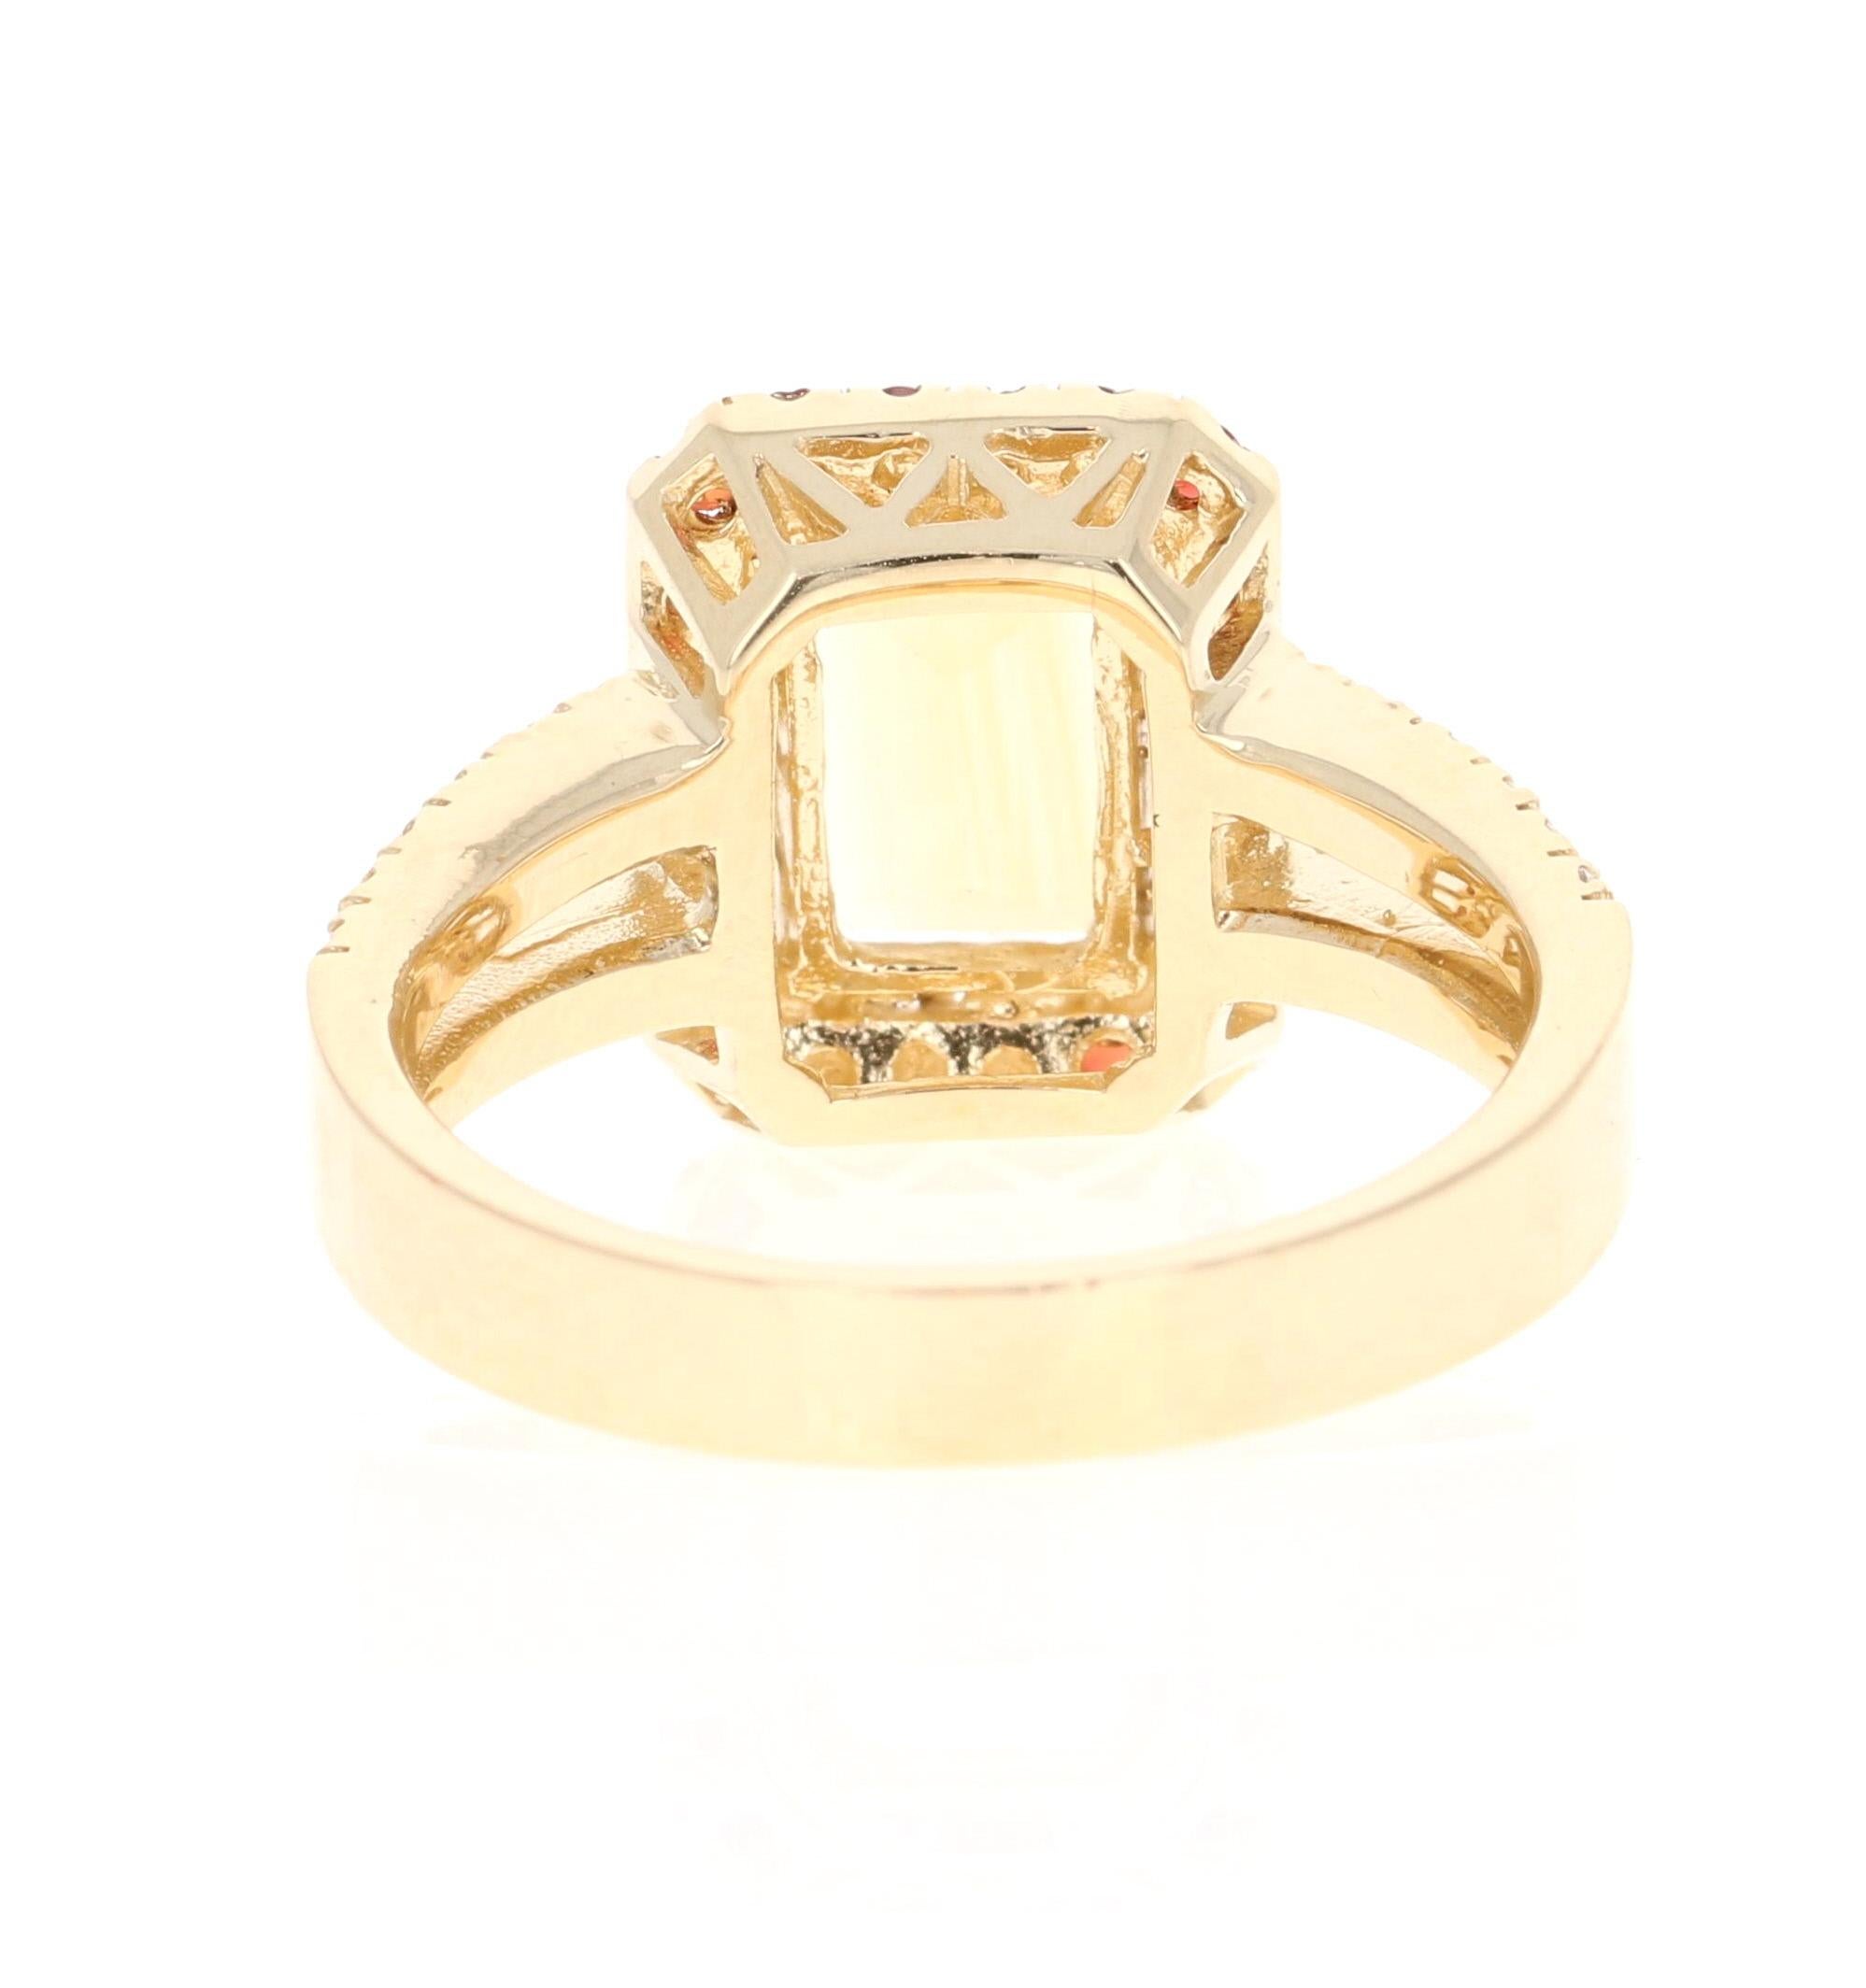 Emerald Cut 3.02 Carat Citrine Sapphire Diamond 14 Karat Yellow Gold Ring For Sale